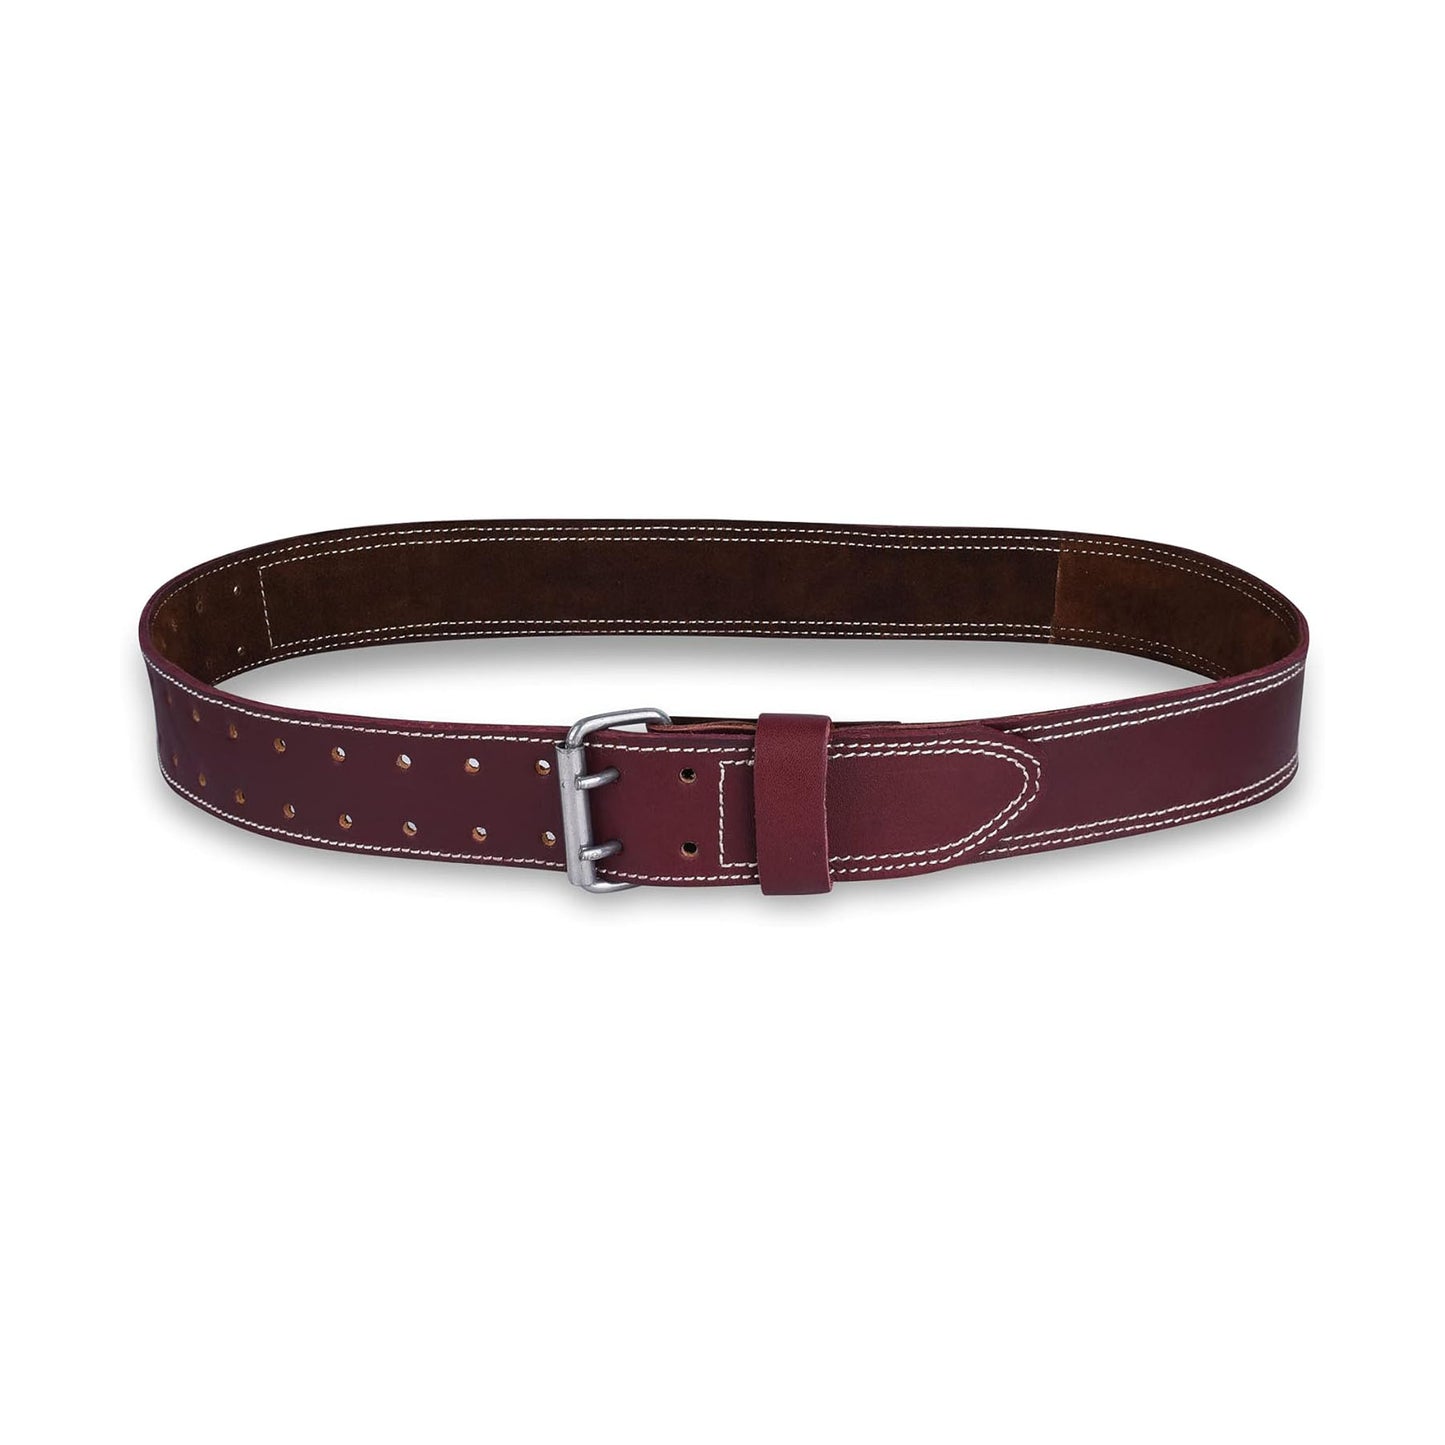 FUERI Premium Quality Leather Work Belt (Maroon)